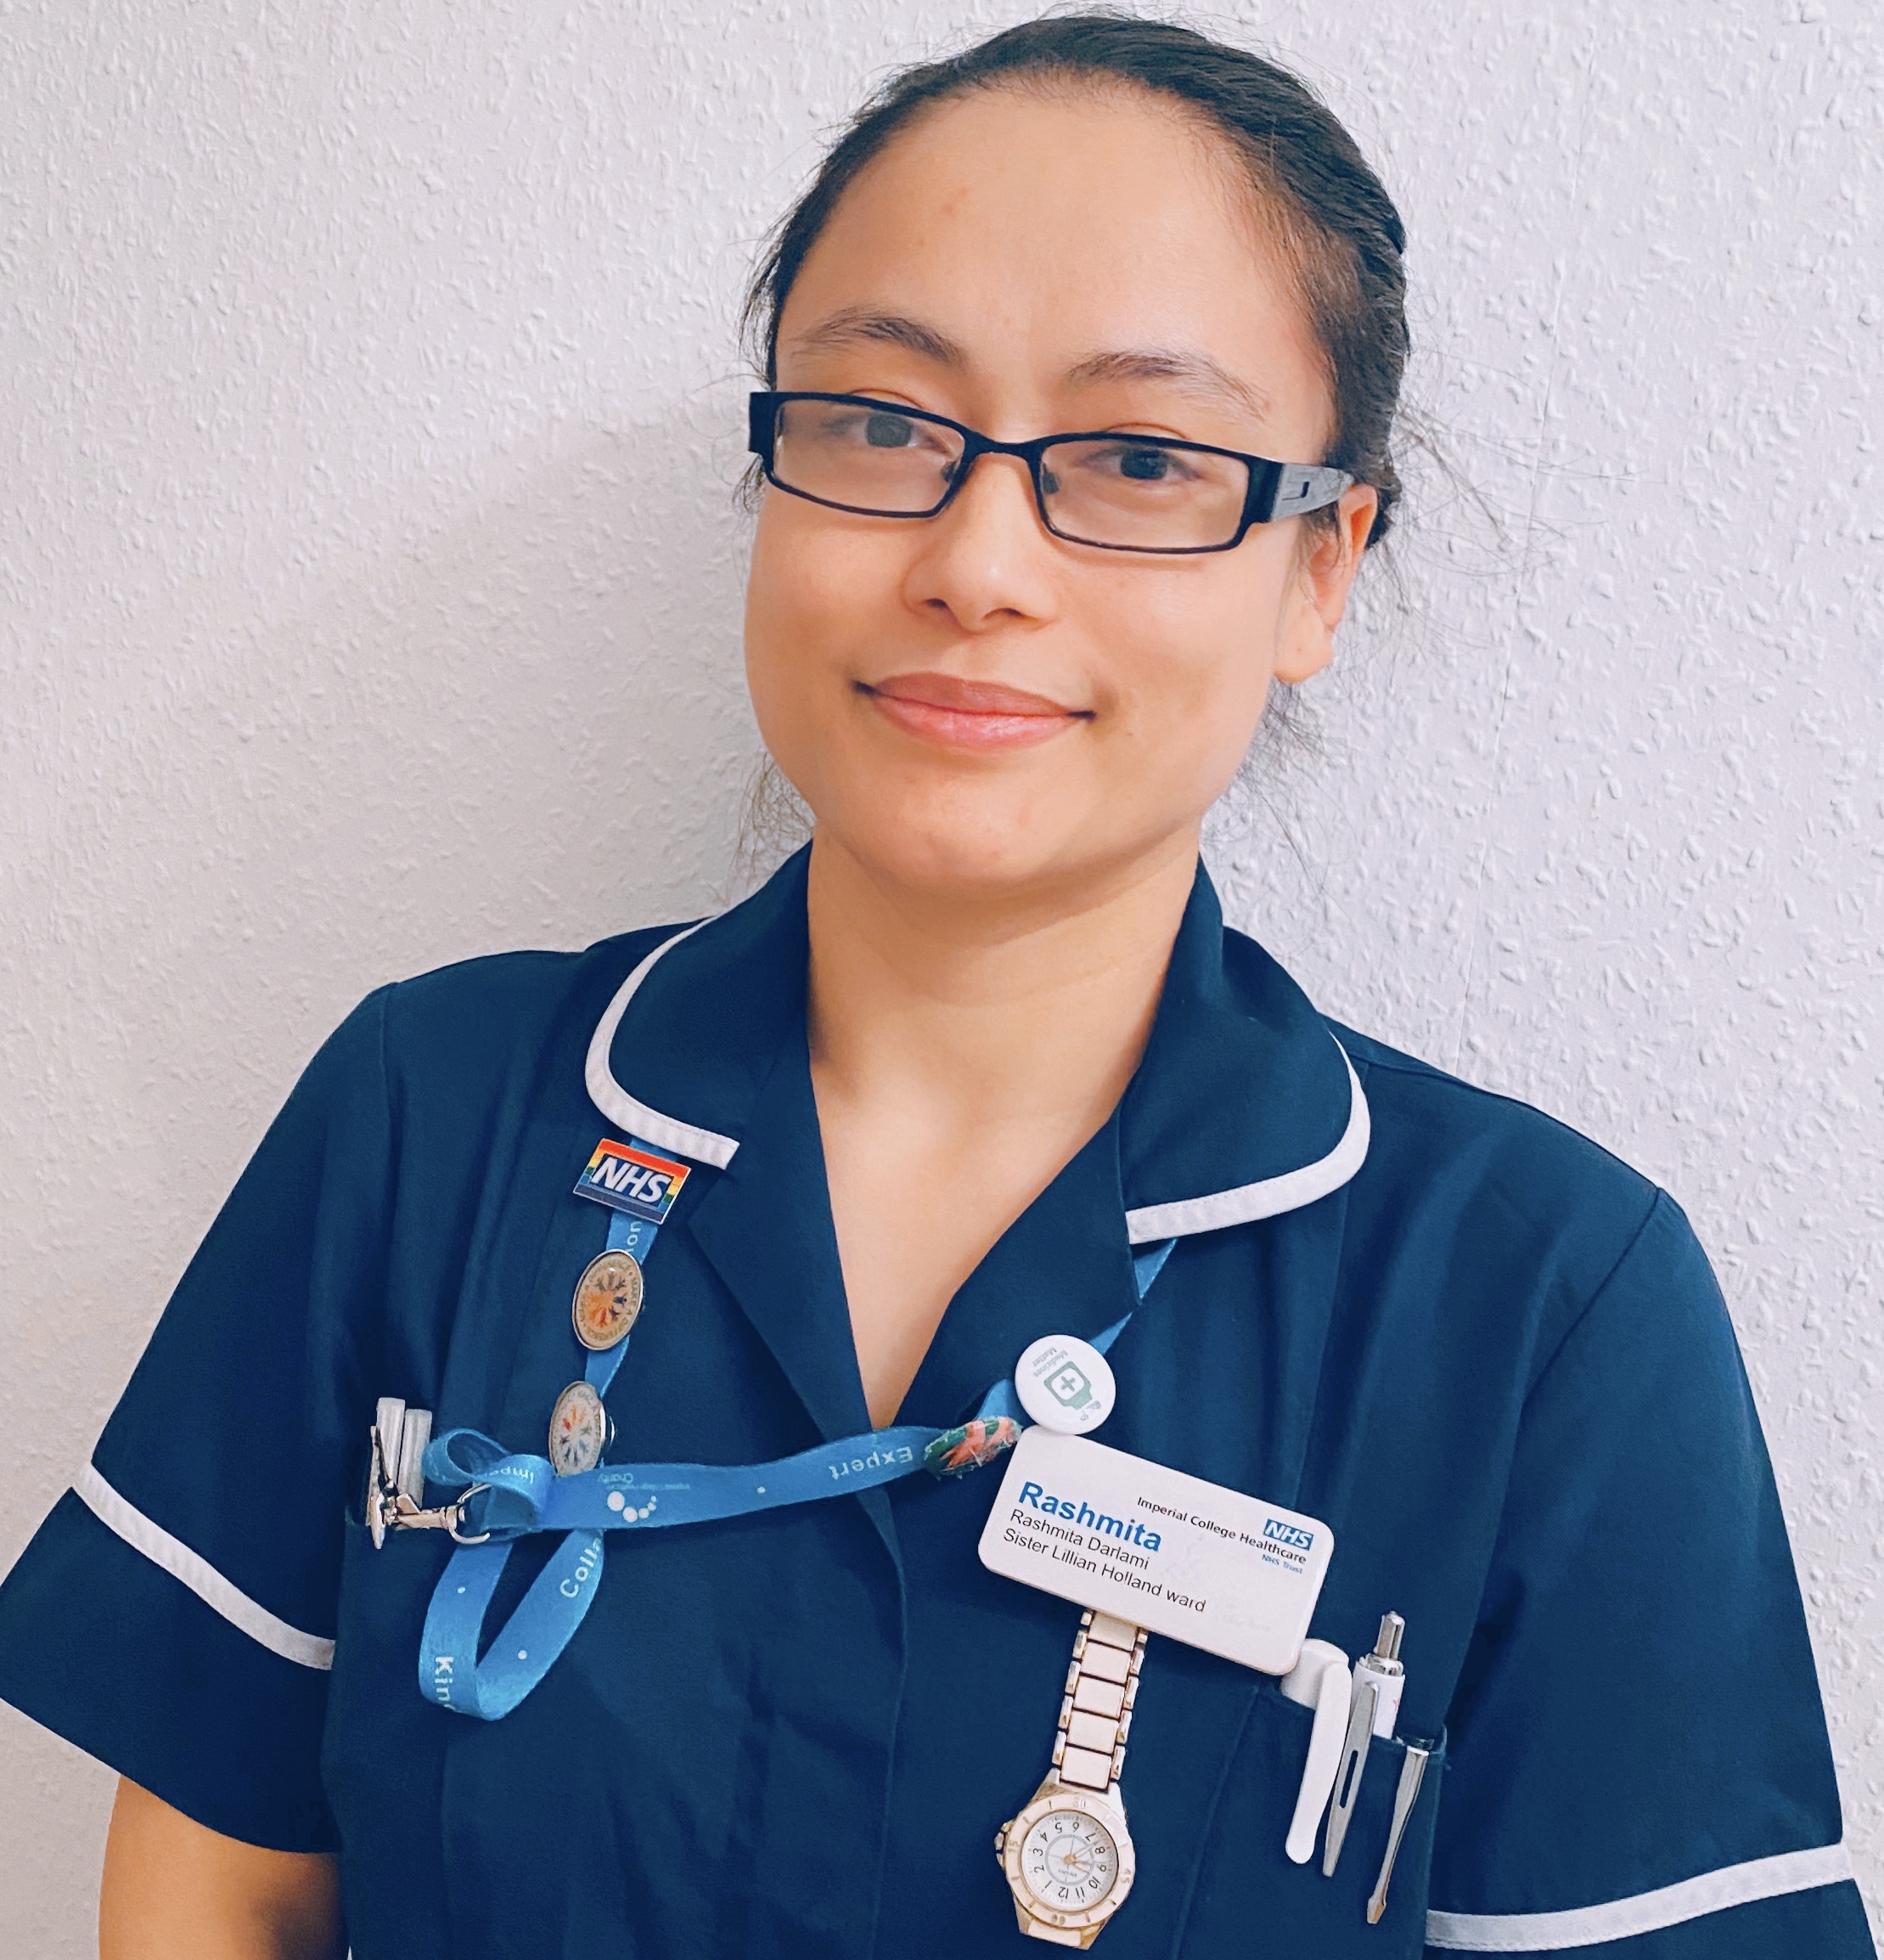 Rashmita Darlami had gone to the Uk in 2005. She is working as a Ward Manager of acute surgical ward, Hillingdon Hospital NHS Trust. Photo Credit: Rashmita Darlami